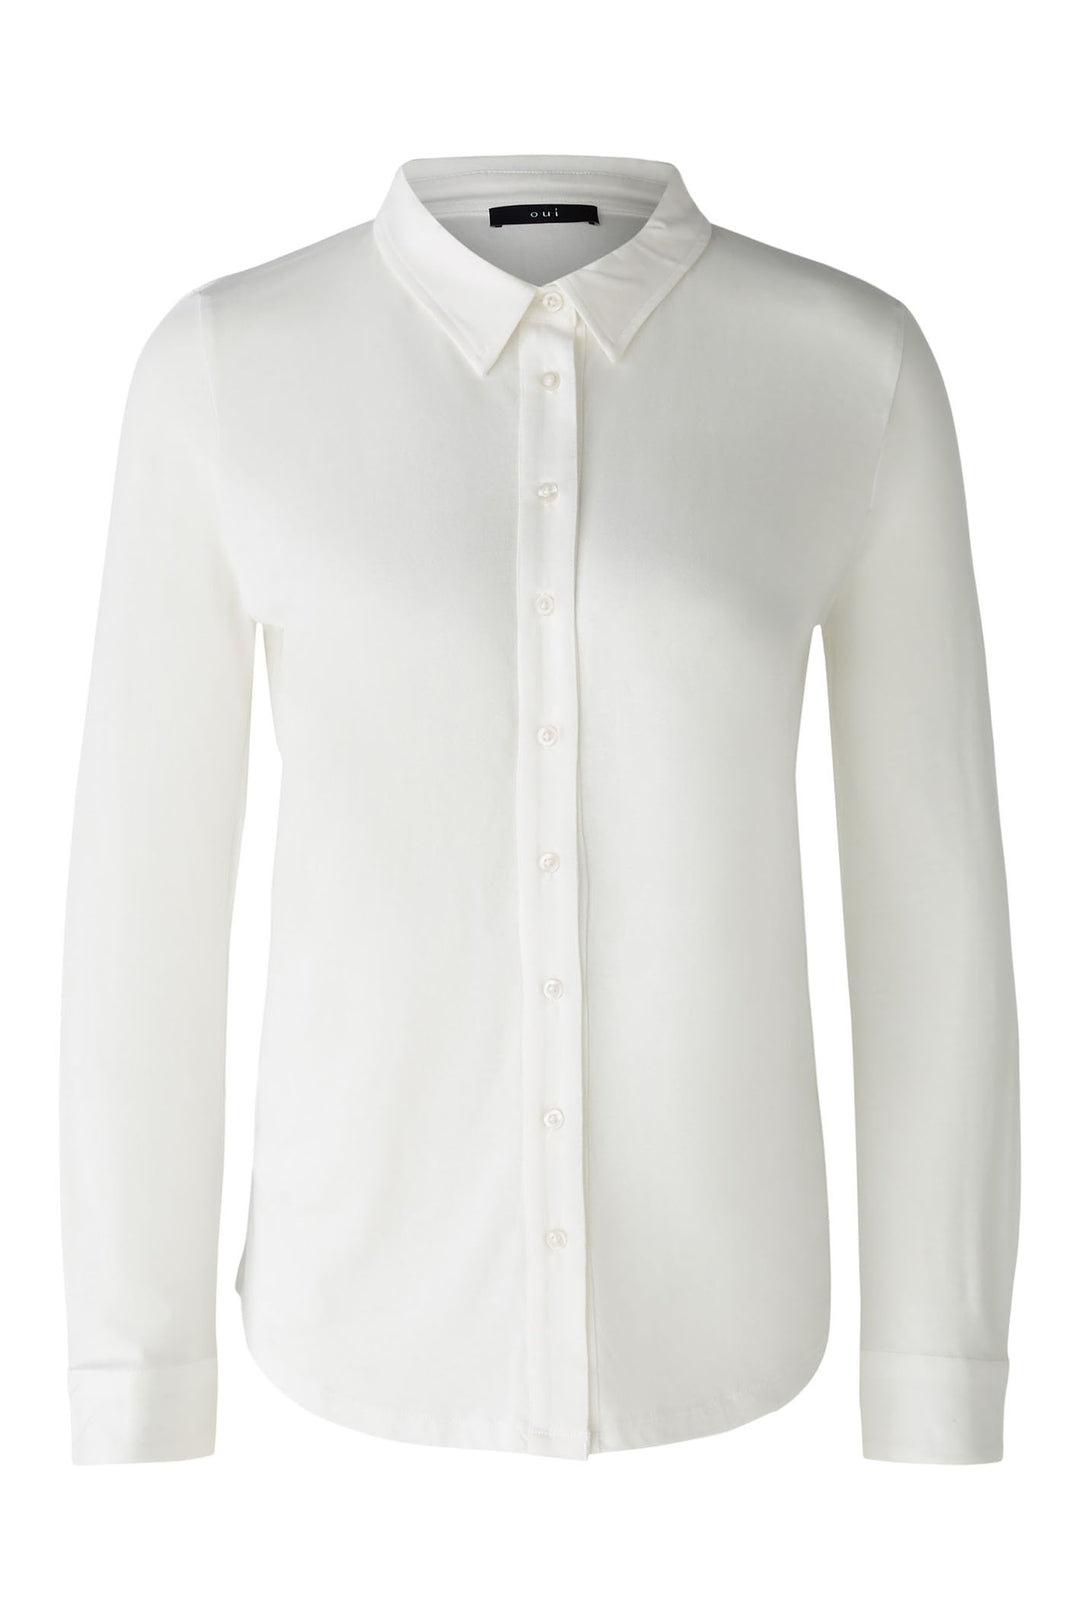 Oui 86746 Cloud Dancer White Shirt - Olivia Grace Fashion